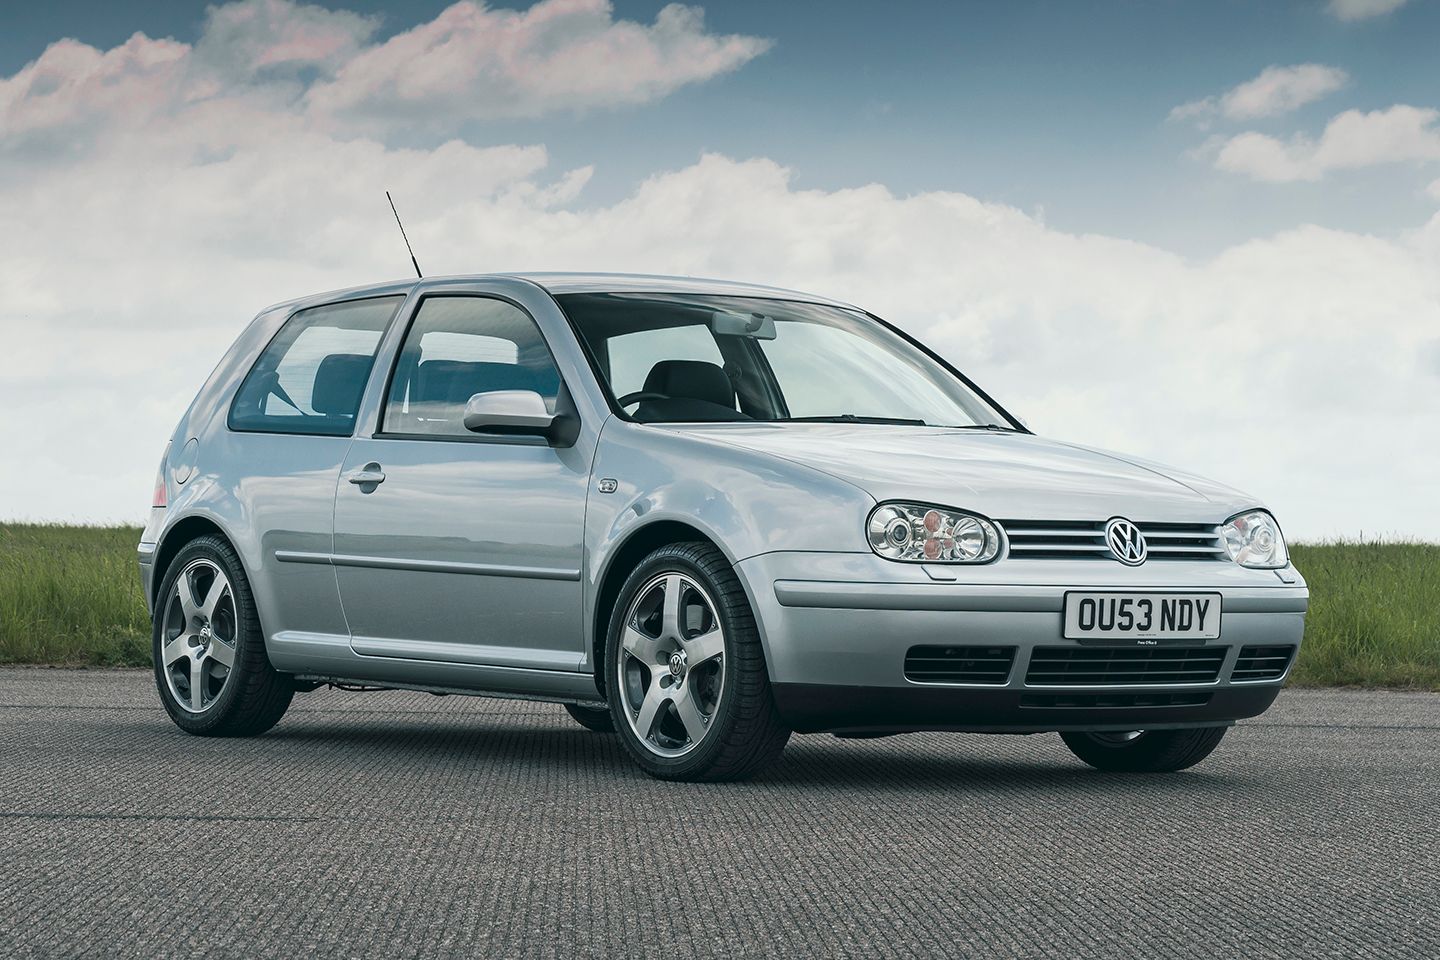 VW Golf 4 1997-2006 (KT Serie)